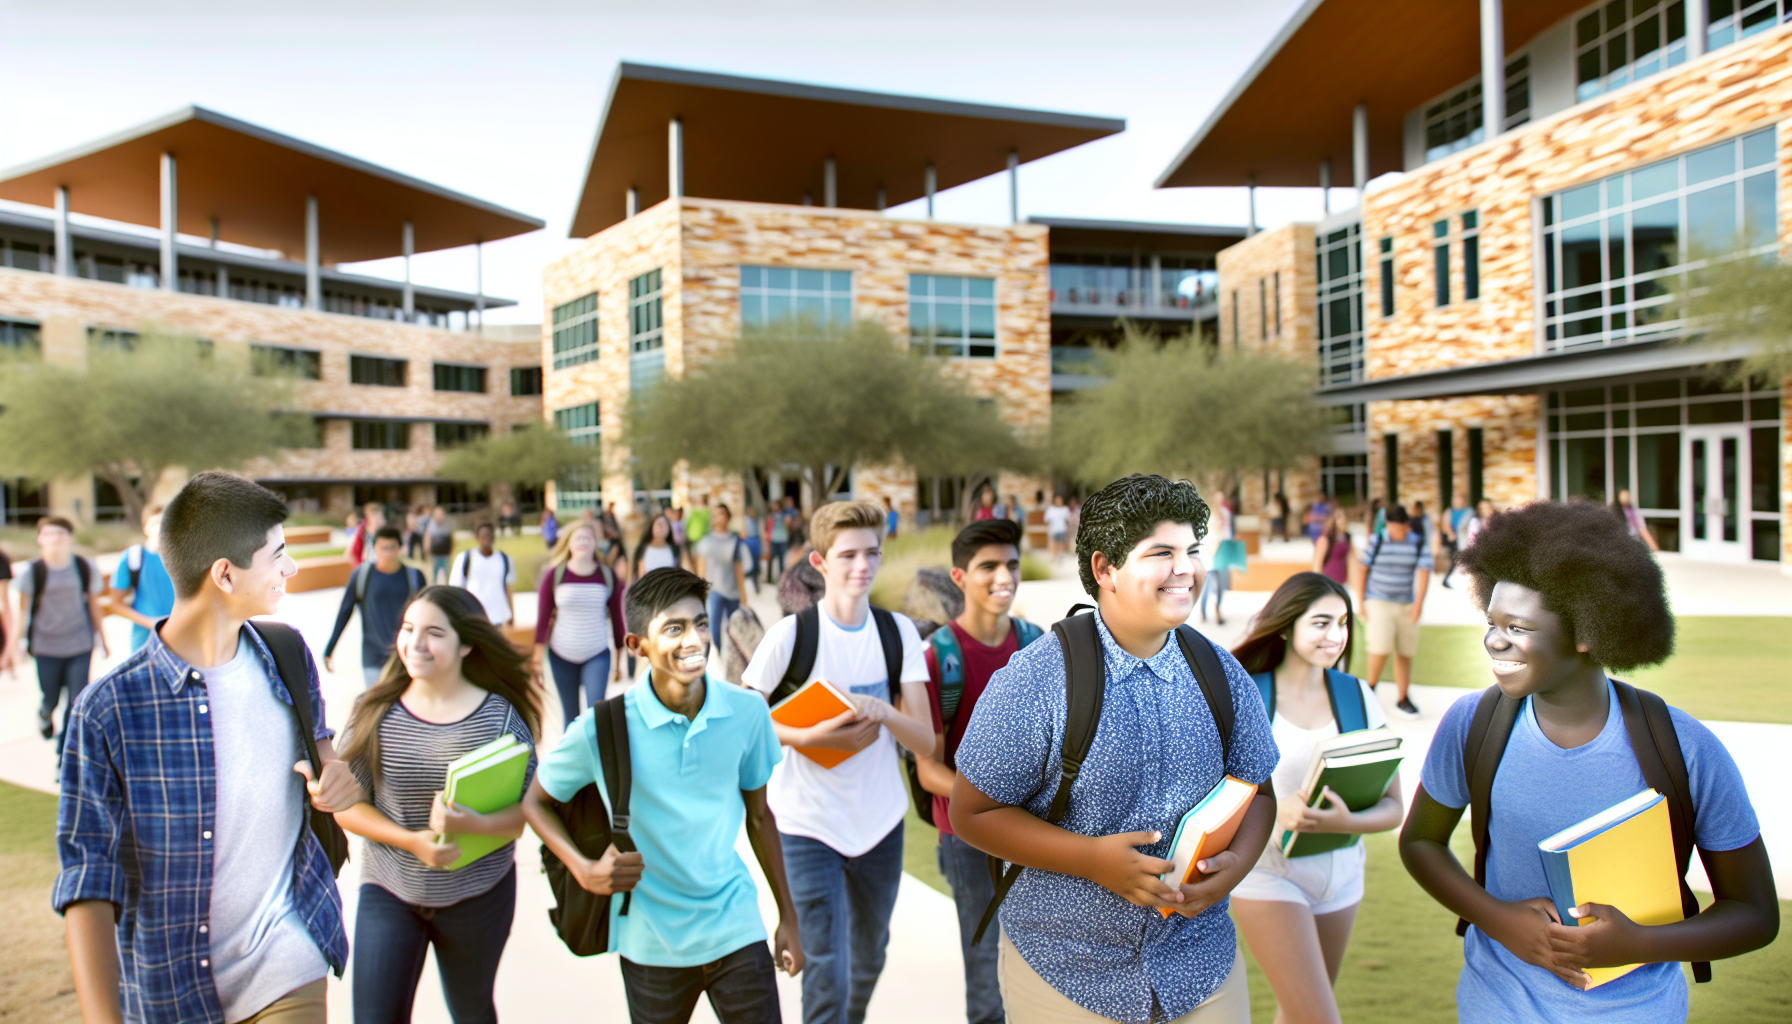 Lake Travis ISD campus with students walking between buildings